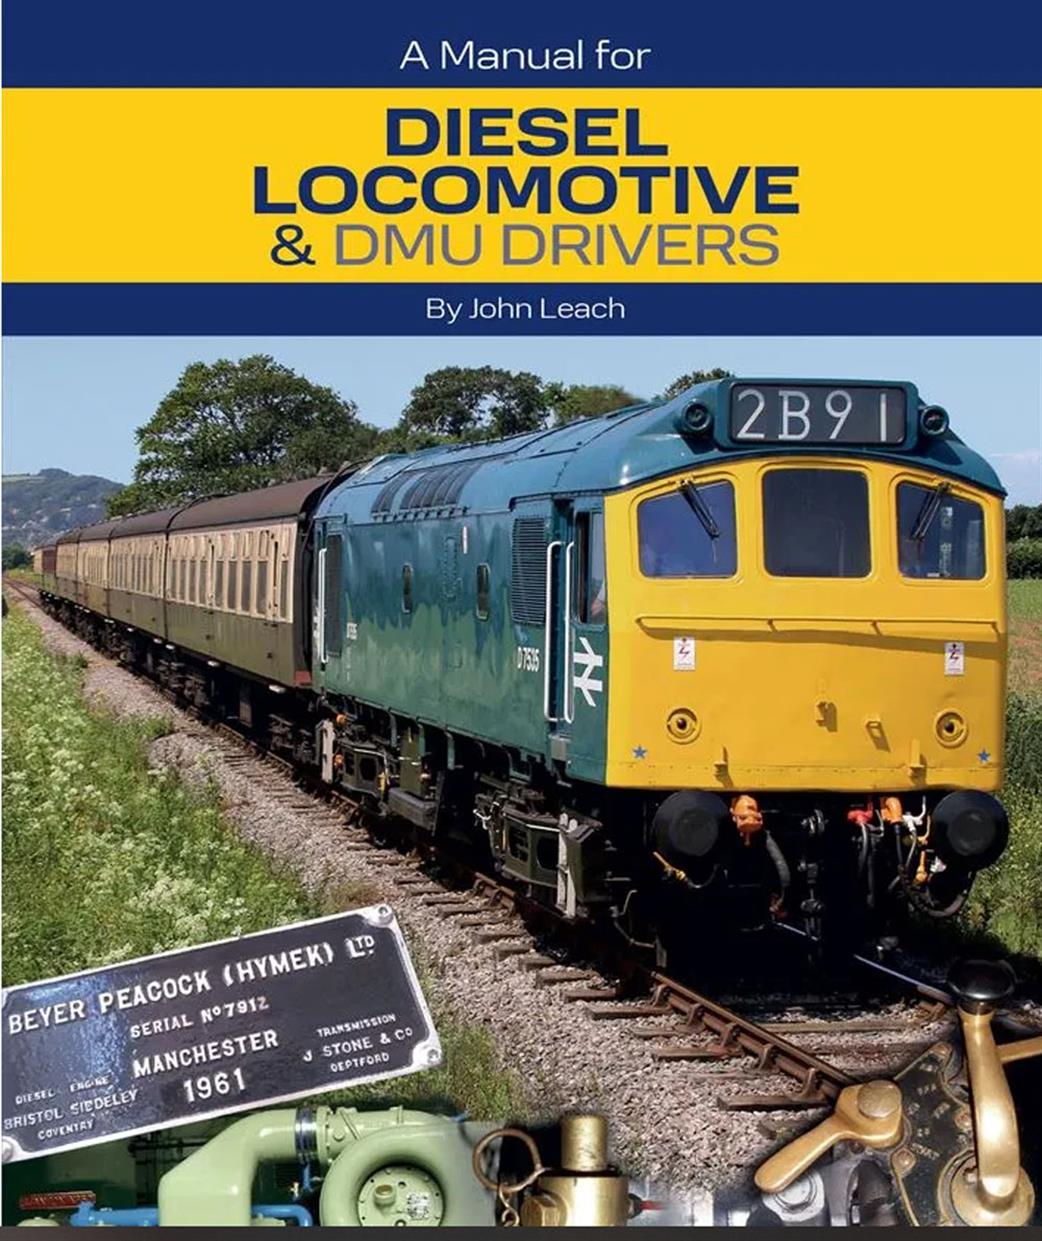 Platform 5 Diesel A Manual for Diesel Locomotive & DMU Drivers by John Leach